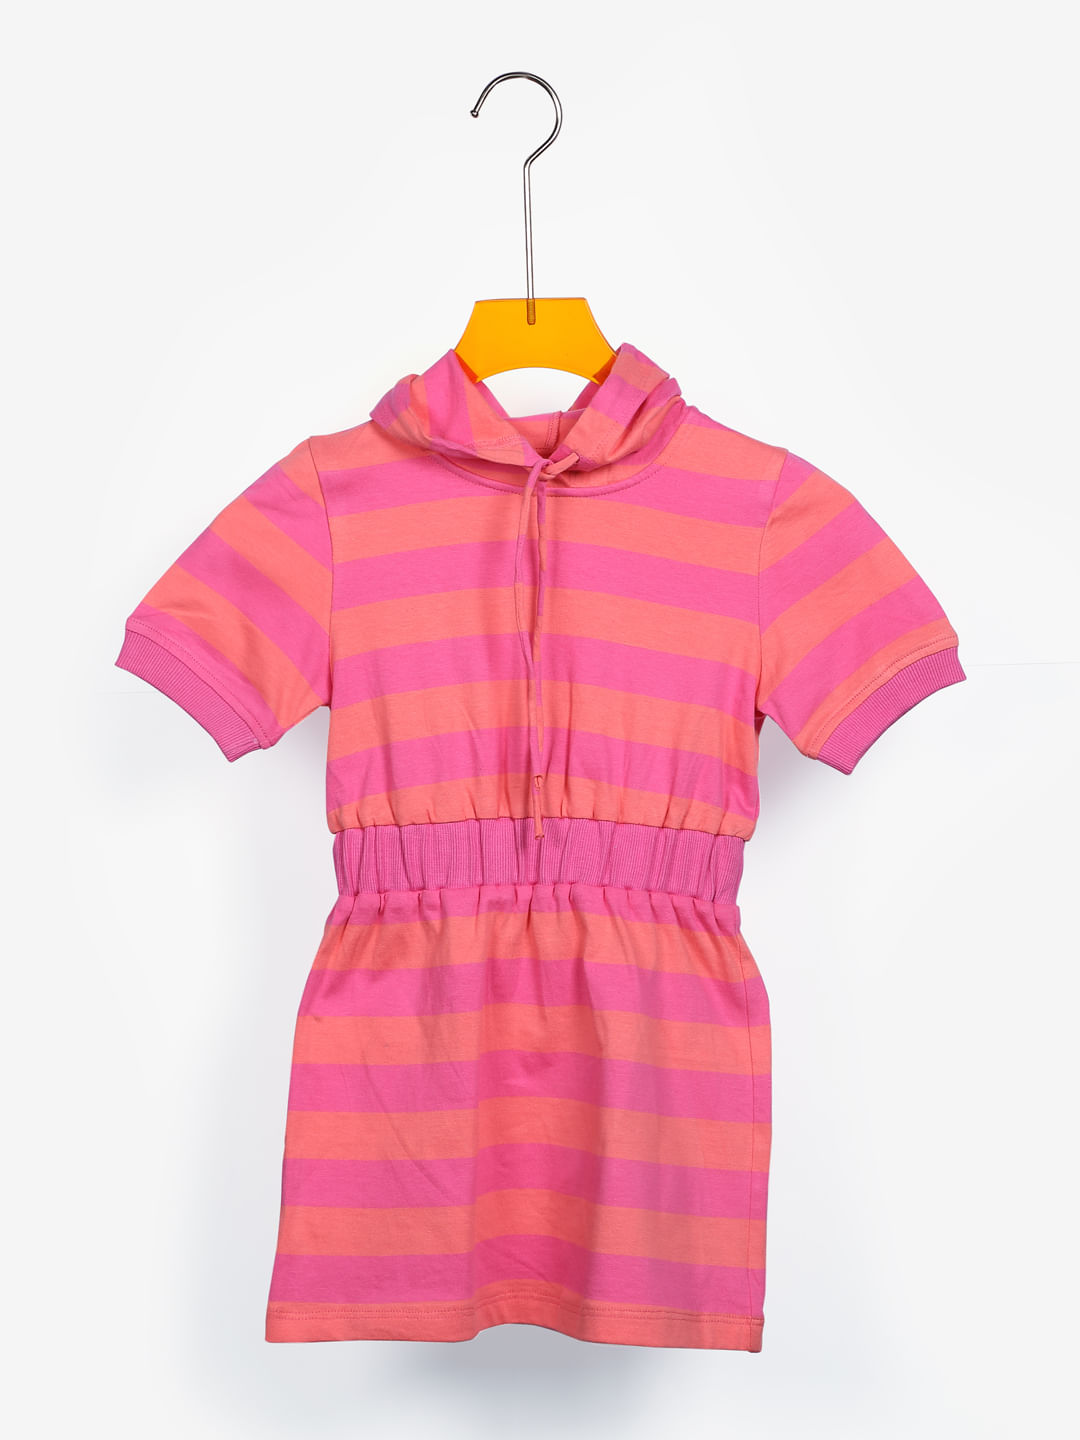 Friends Hoodies for Girls, Girls Hoodie Dress, Friends Merchandise for Girls  | eBay